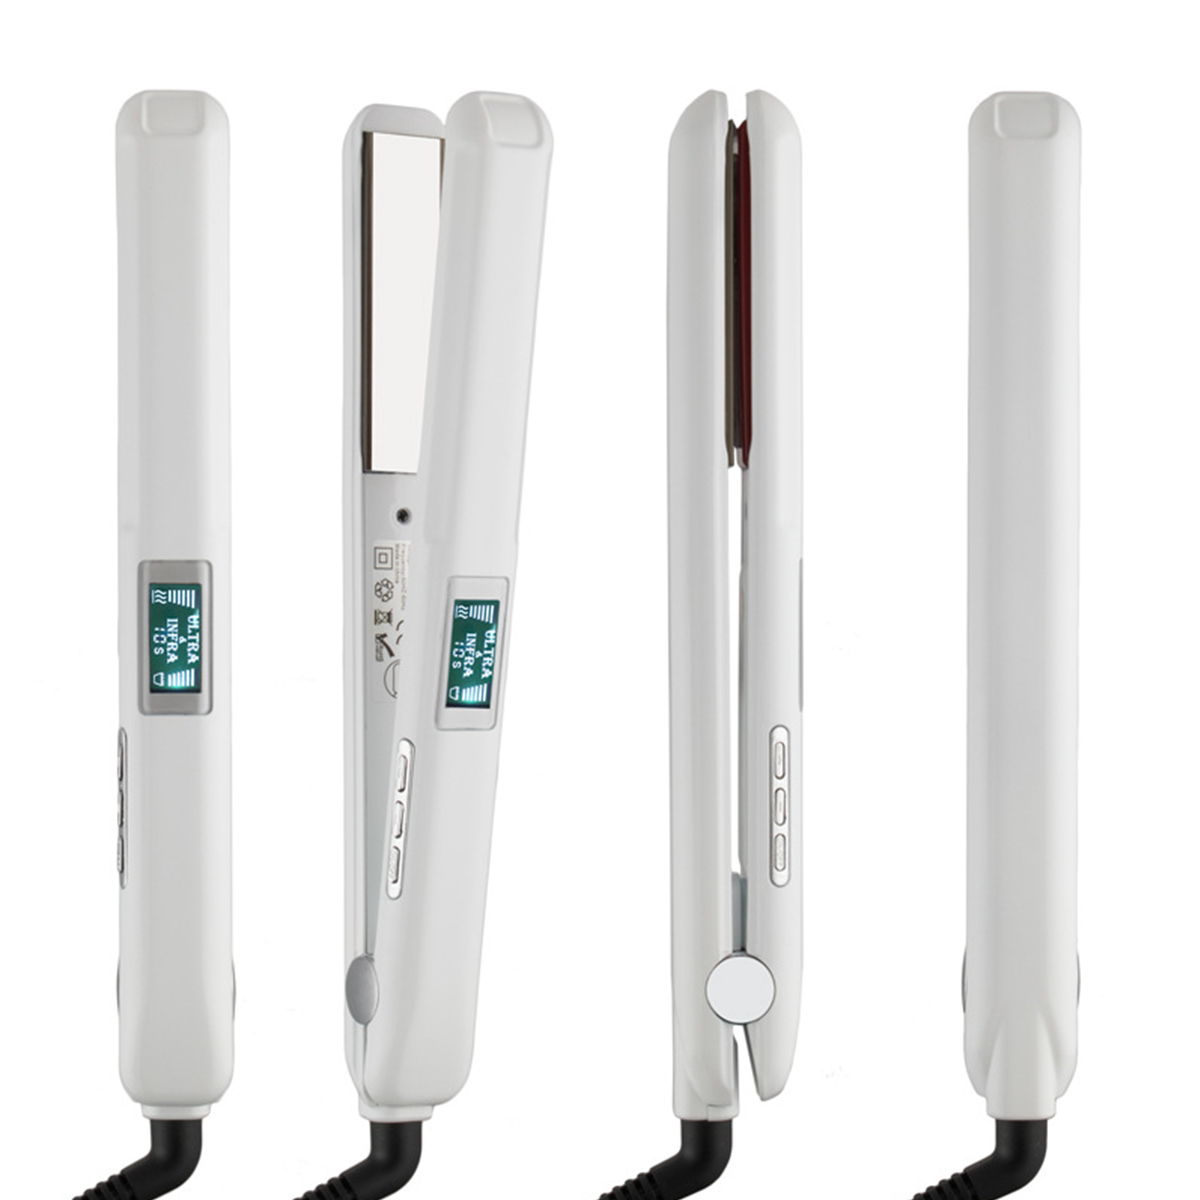 SHAOKE Infrarot-Haarglätter mit Ultraschalltechnologie und Temperaturstufen: Kabel Haarglätter, 7 drehbarem 360°